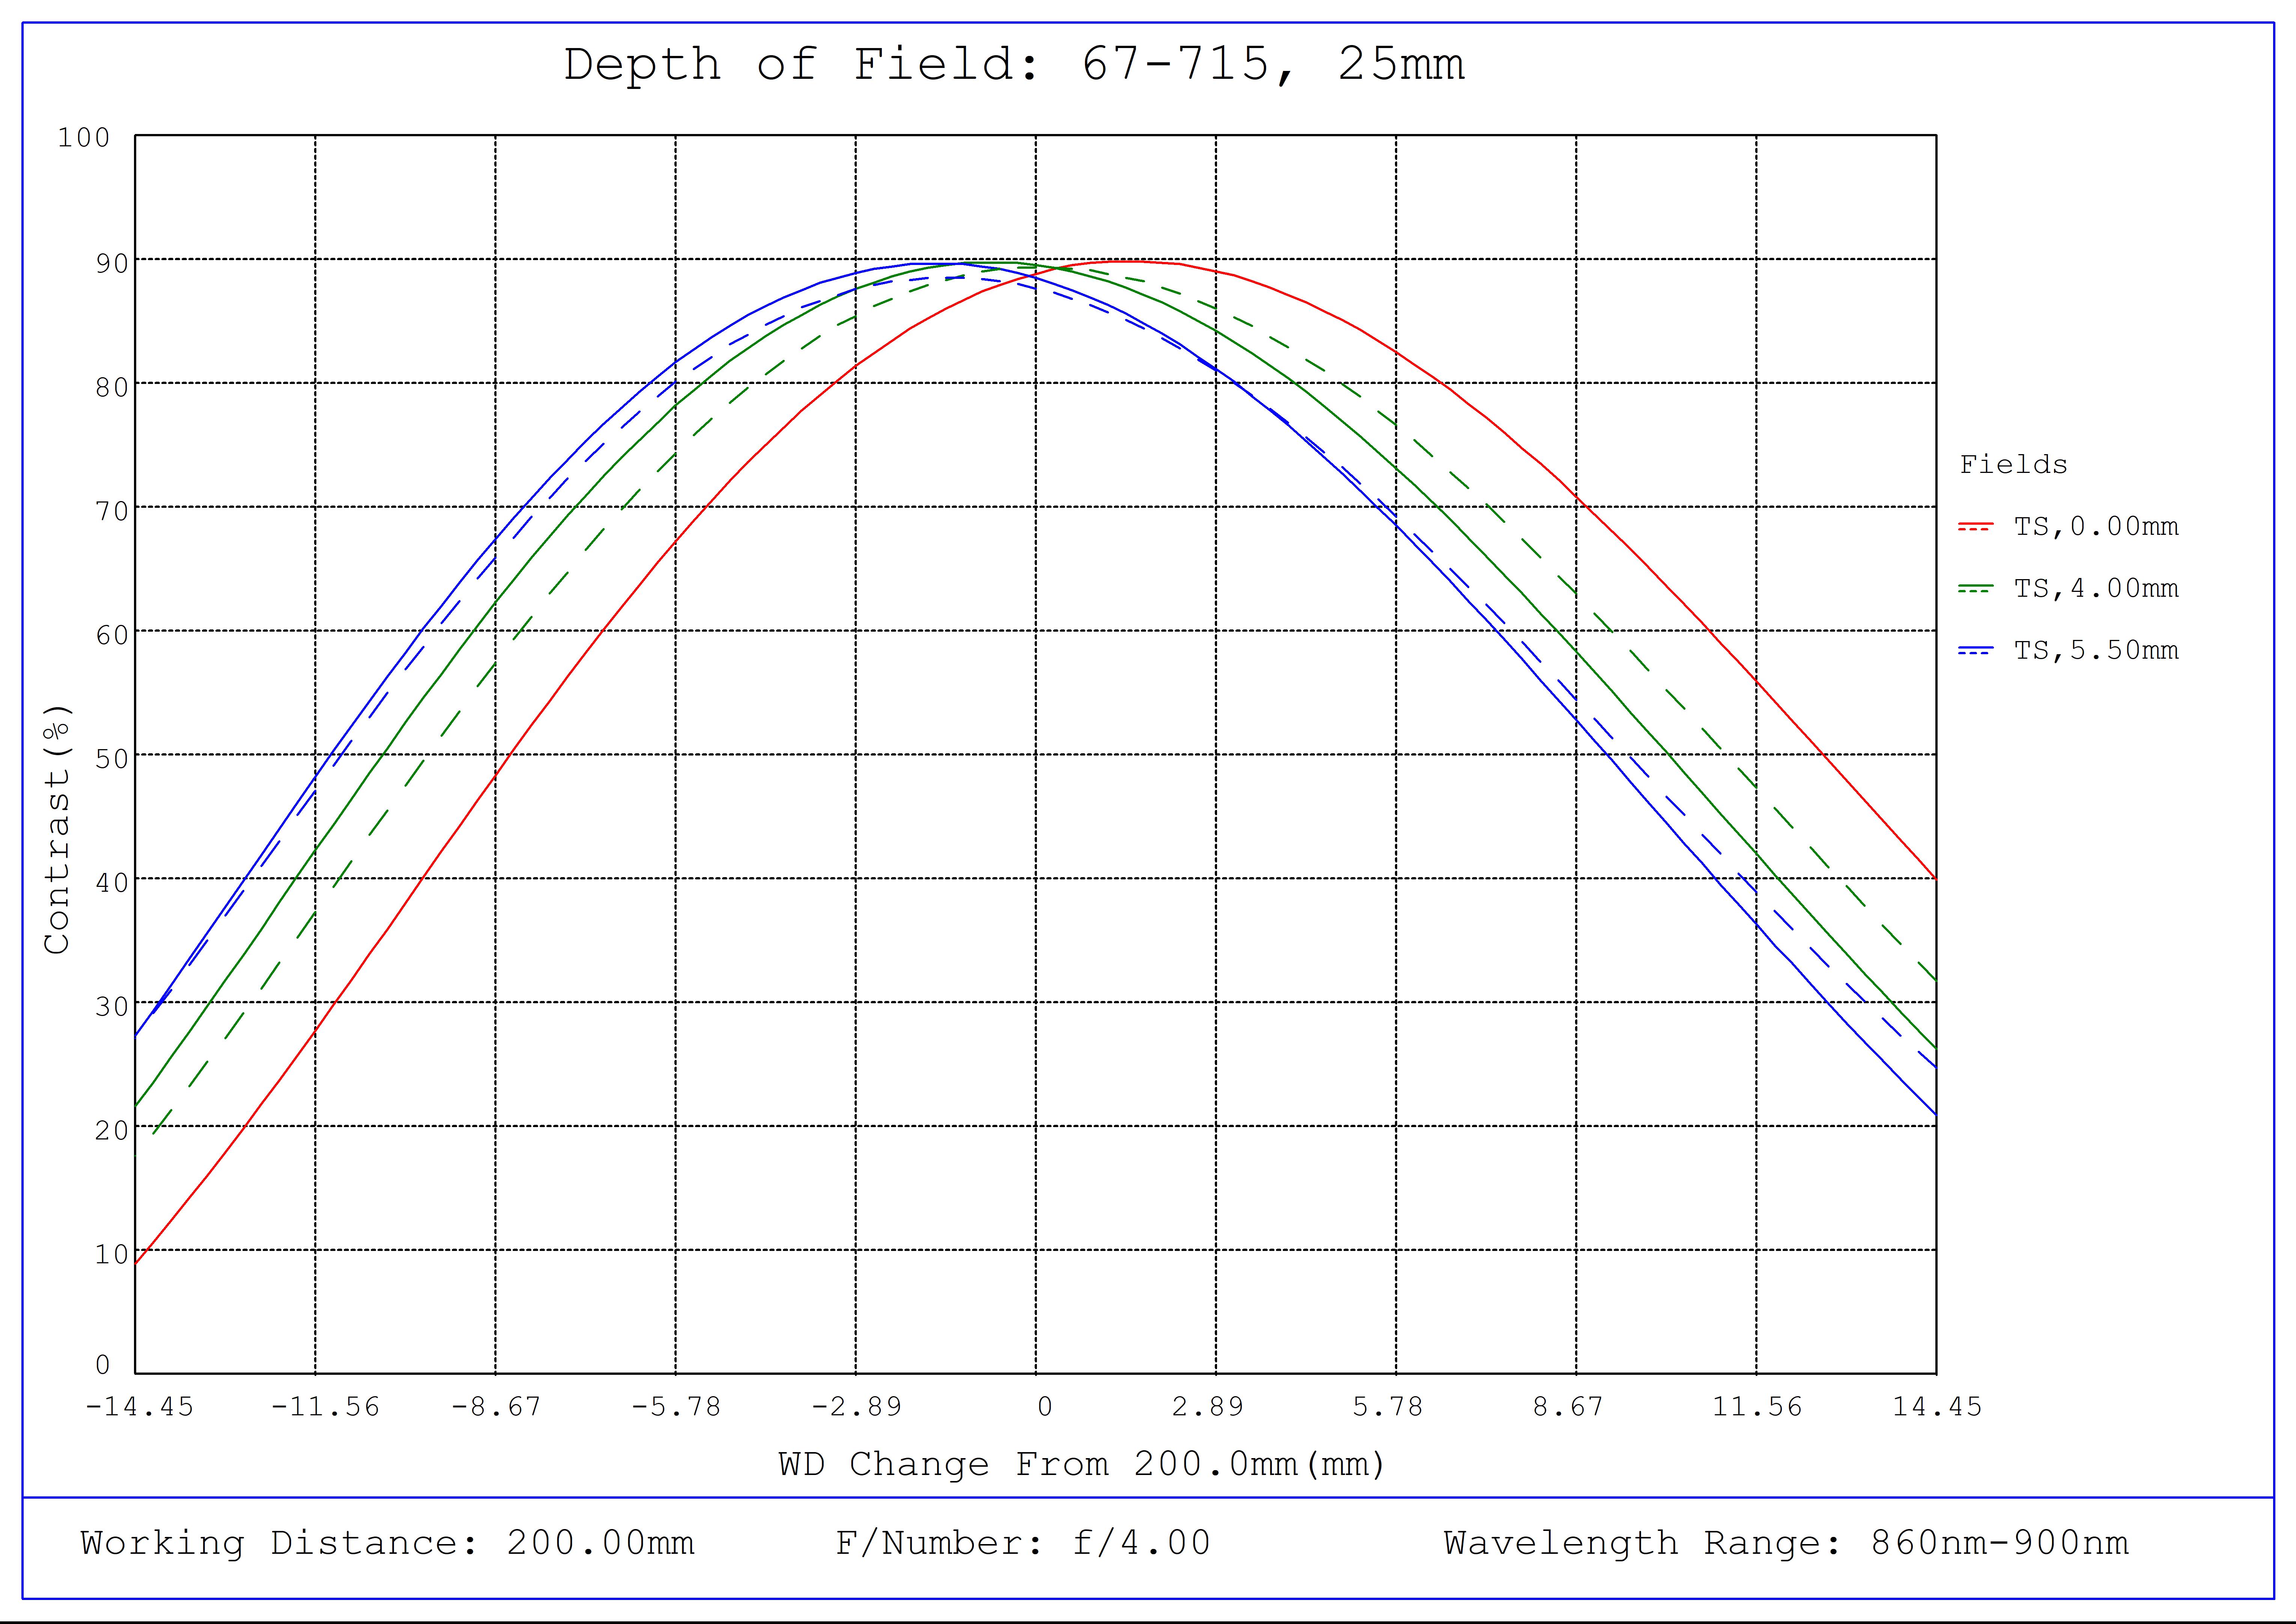 #67-715, 25mm C VIS-NIR Series Fixed Focal Length Lens, Depth of Field Plot (NIR), 200mm Working Distance, f4